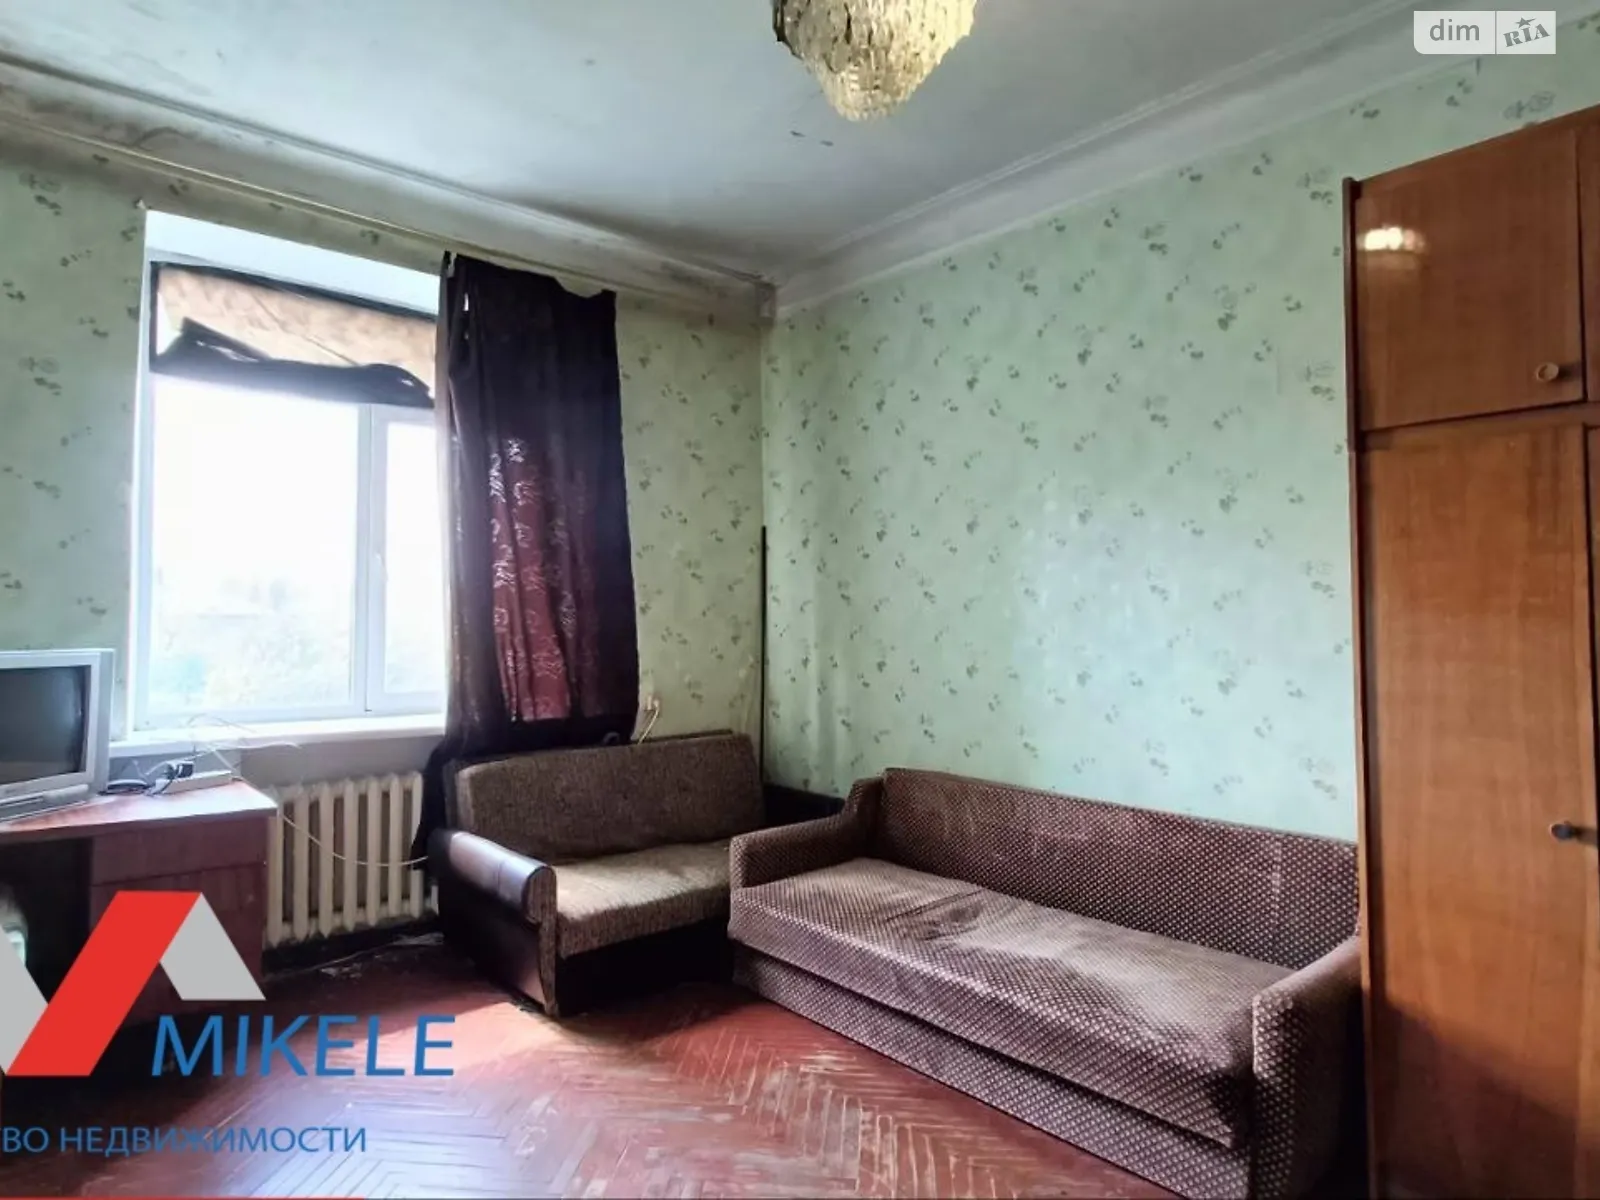 Продается комната 19 кв. м в Киеве, цена: 16000 $ - фото 1